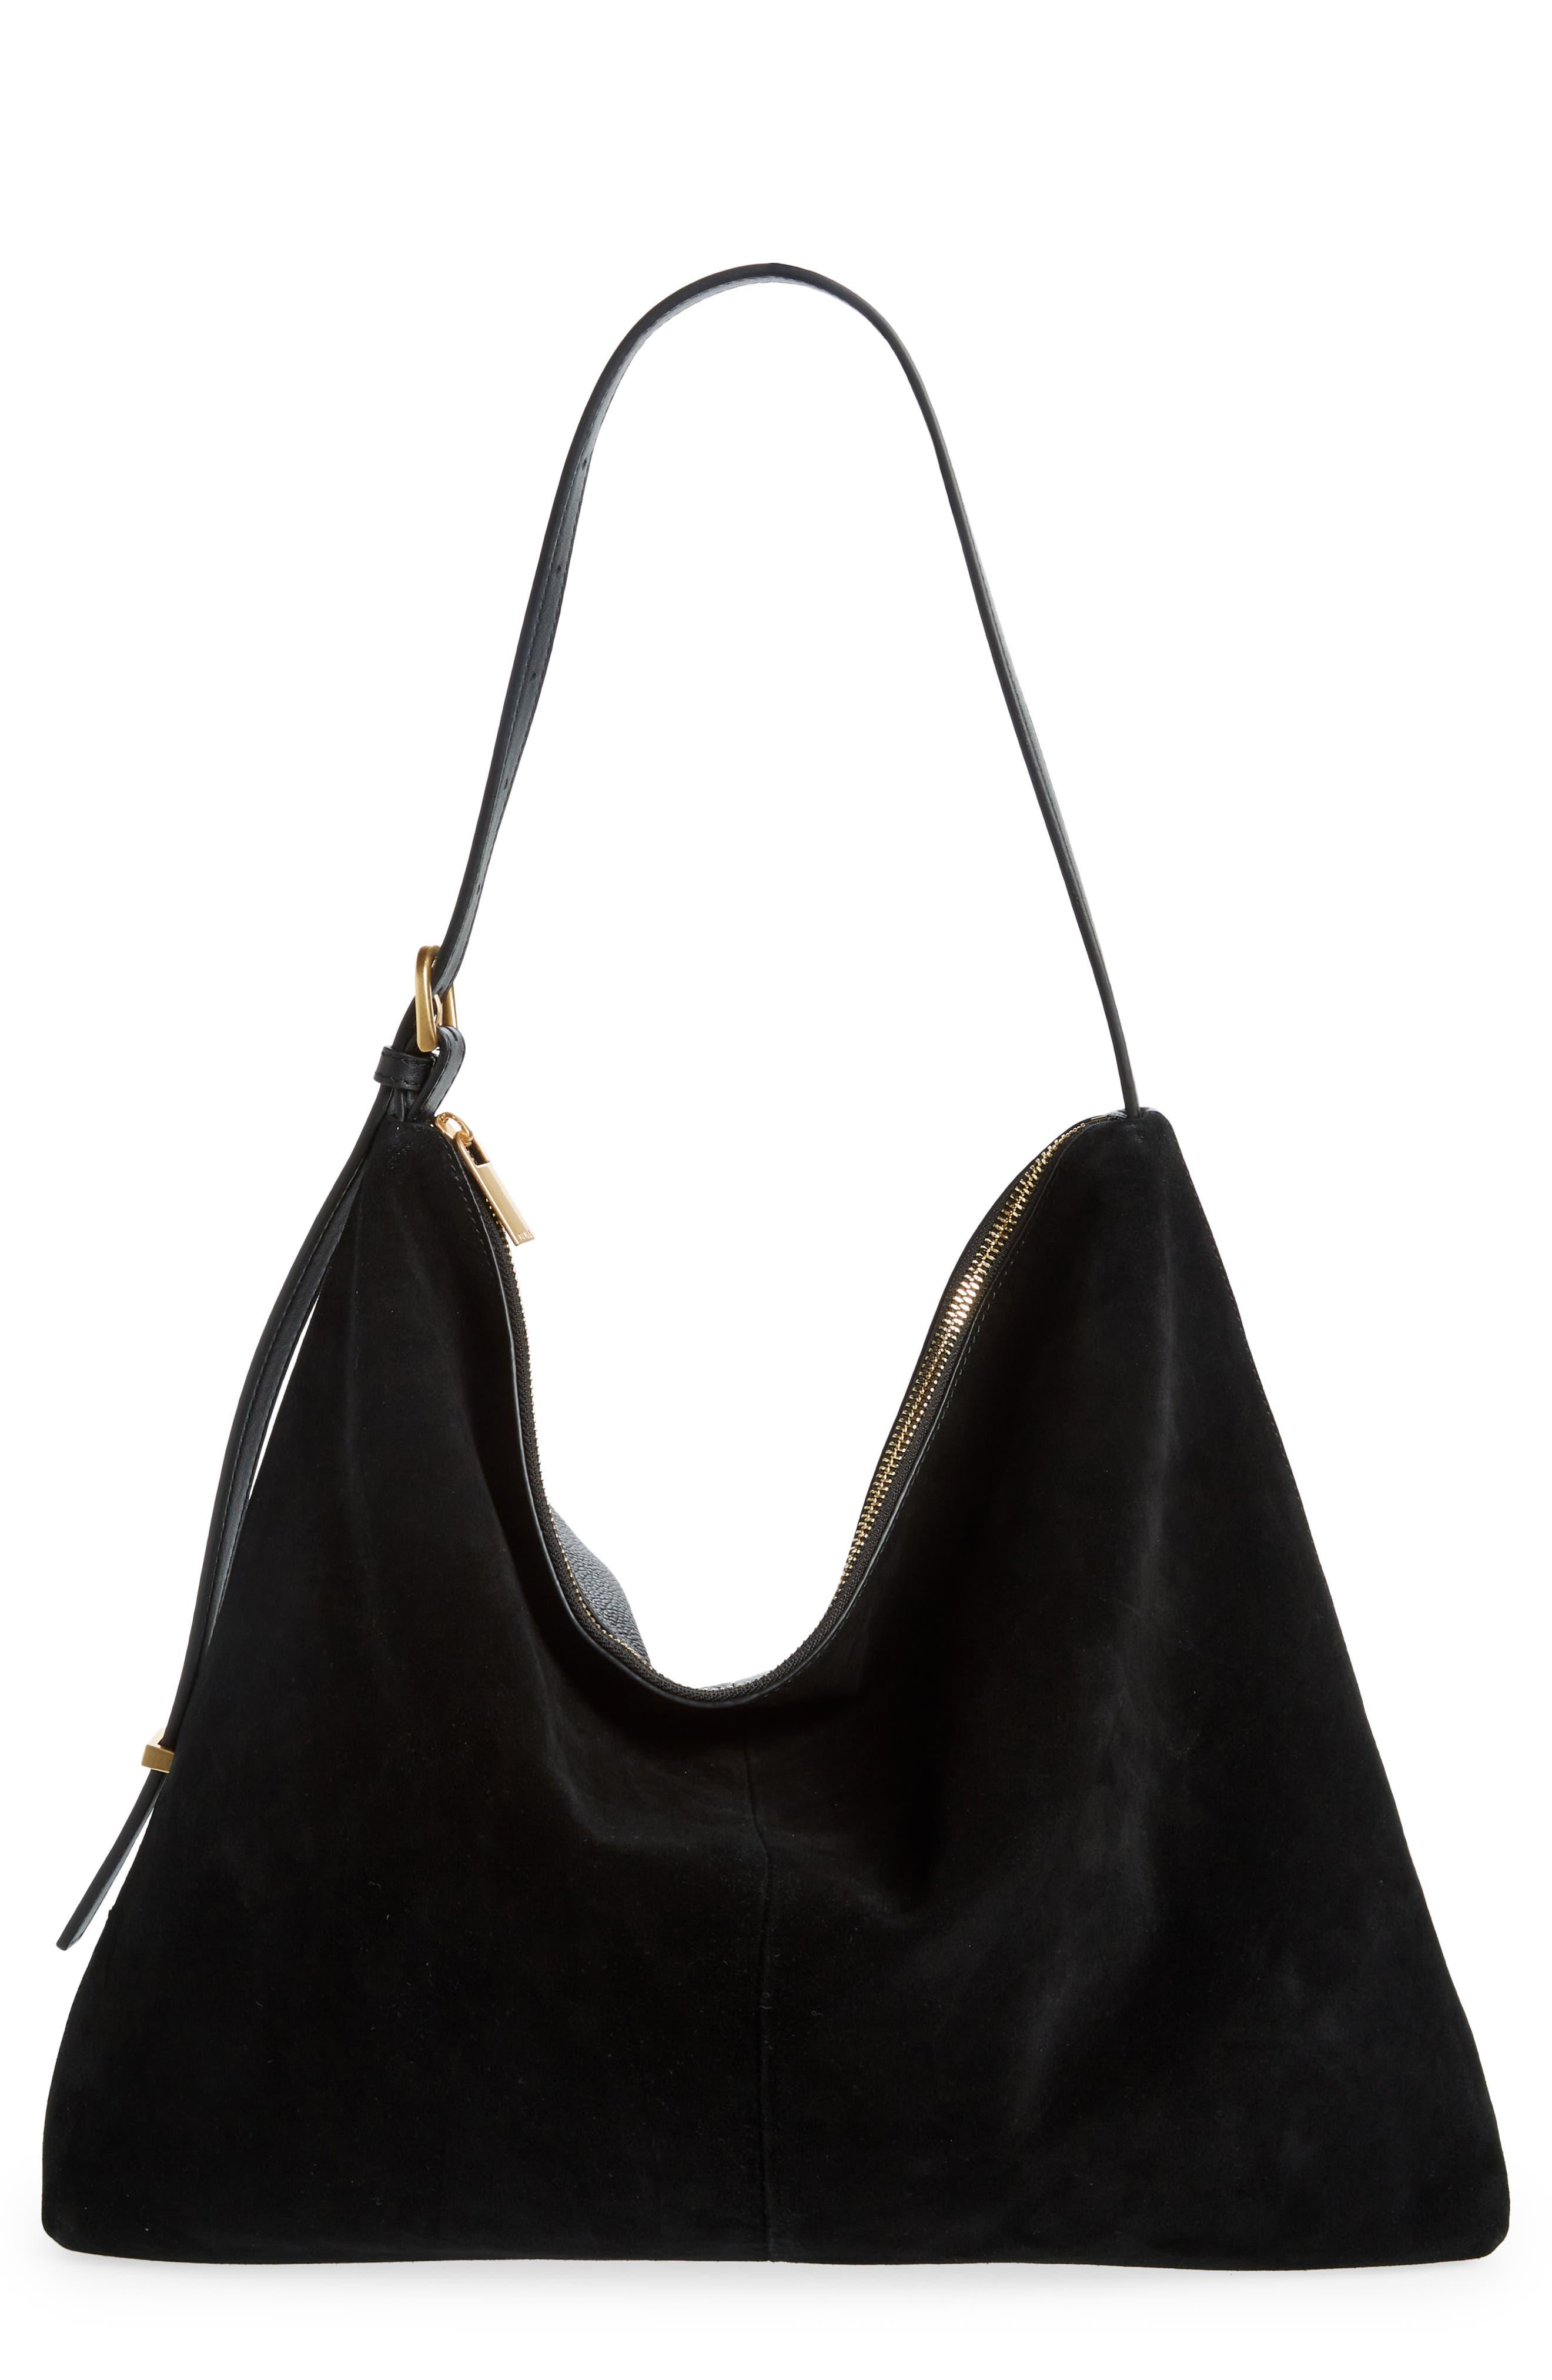 Reiss Vigo Leather Shoulder Bag in Black | Lyst